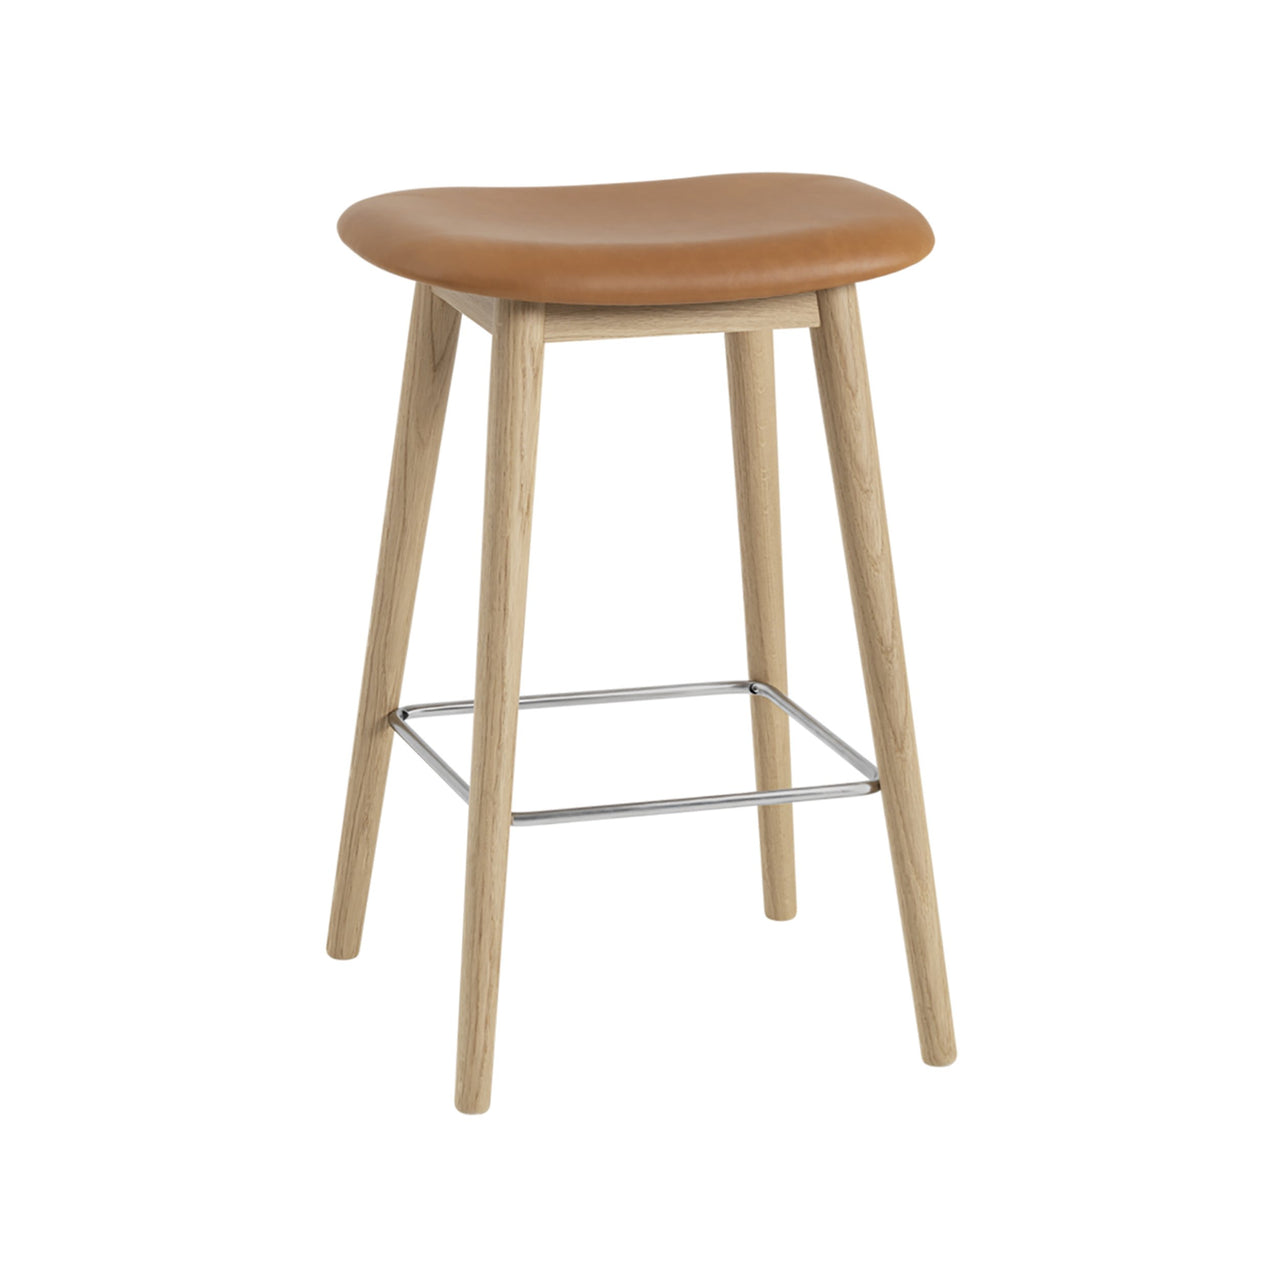 Fiber Bar + Counter Stool: Wood Base + Upholstered + Counter + Oak